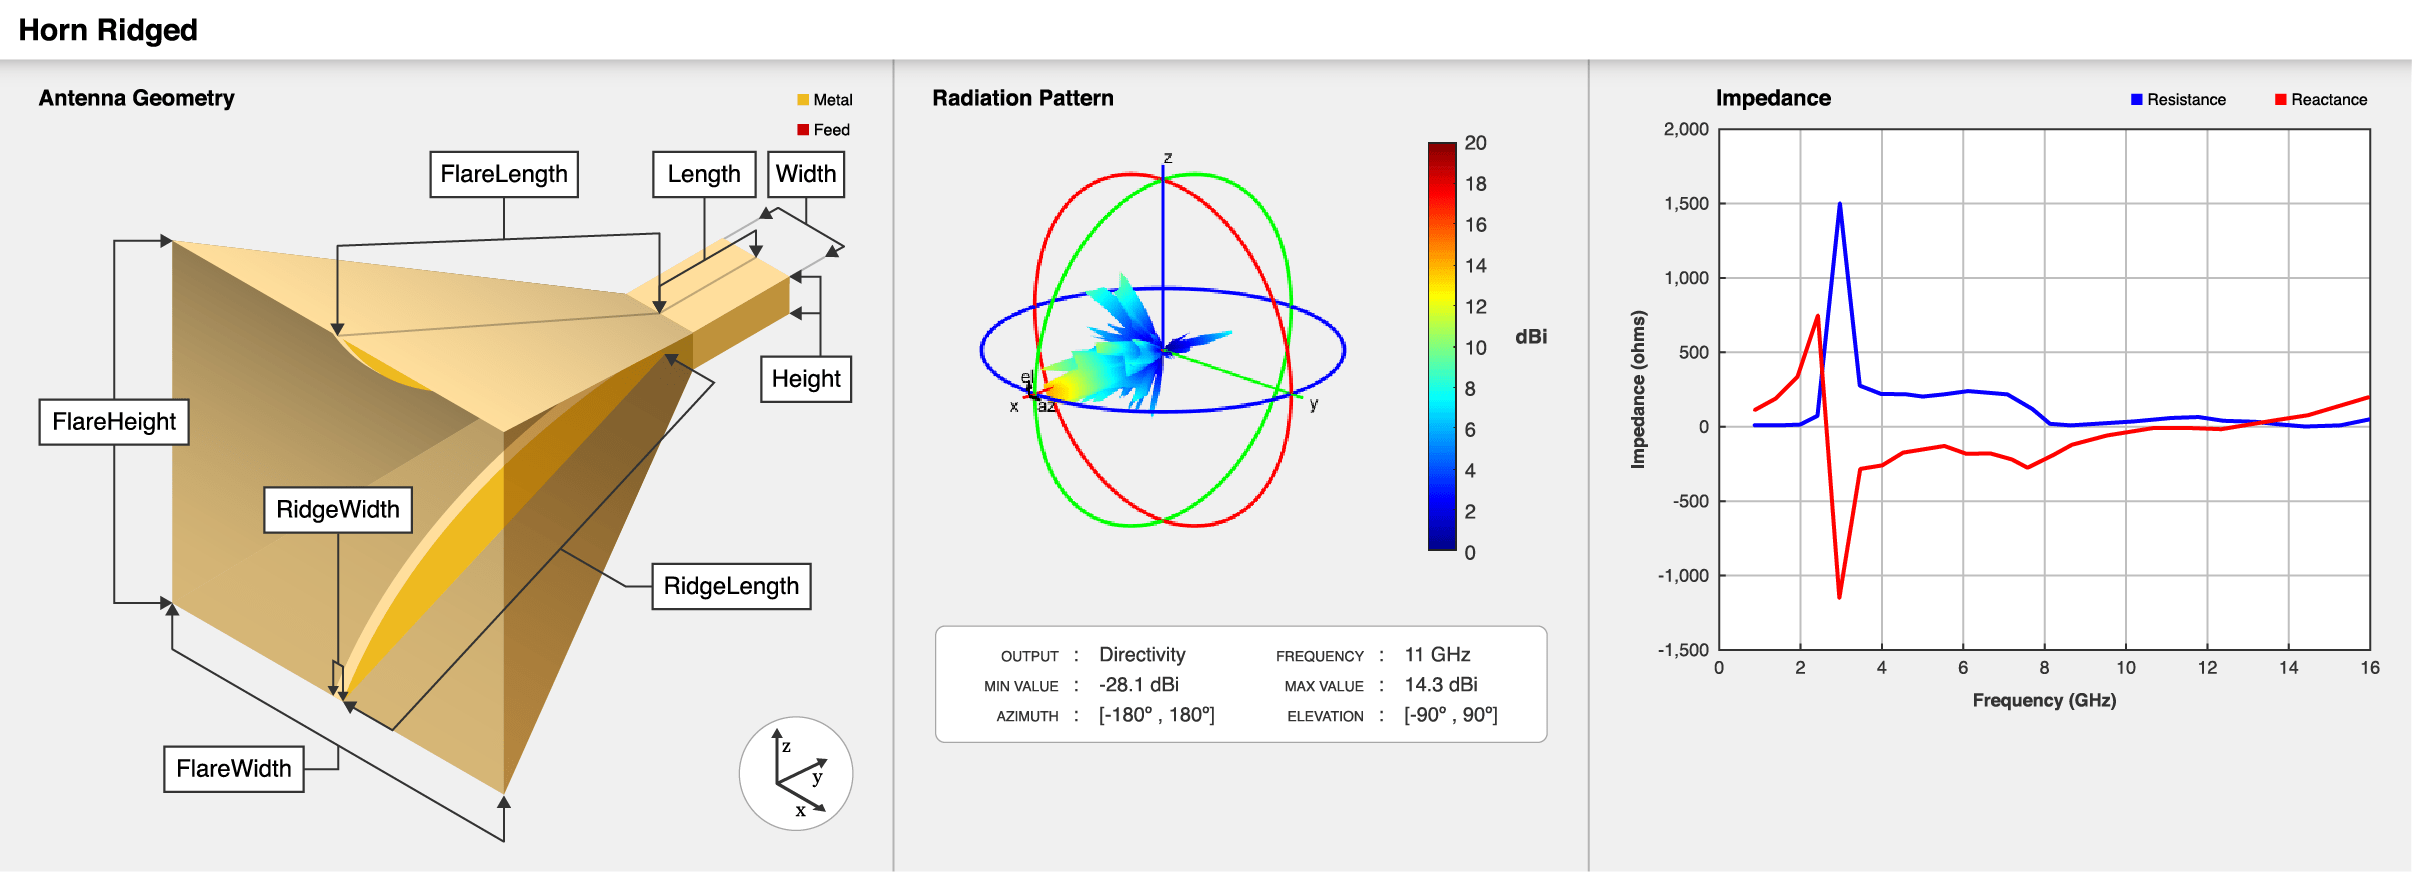 Rectangular double ridged horn antenna geometry, default radiation pattern, and impedance plot.